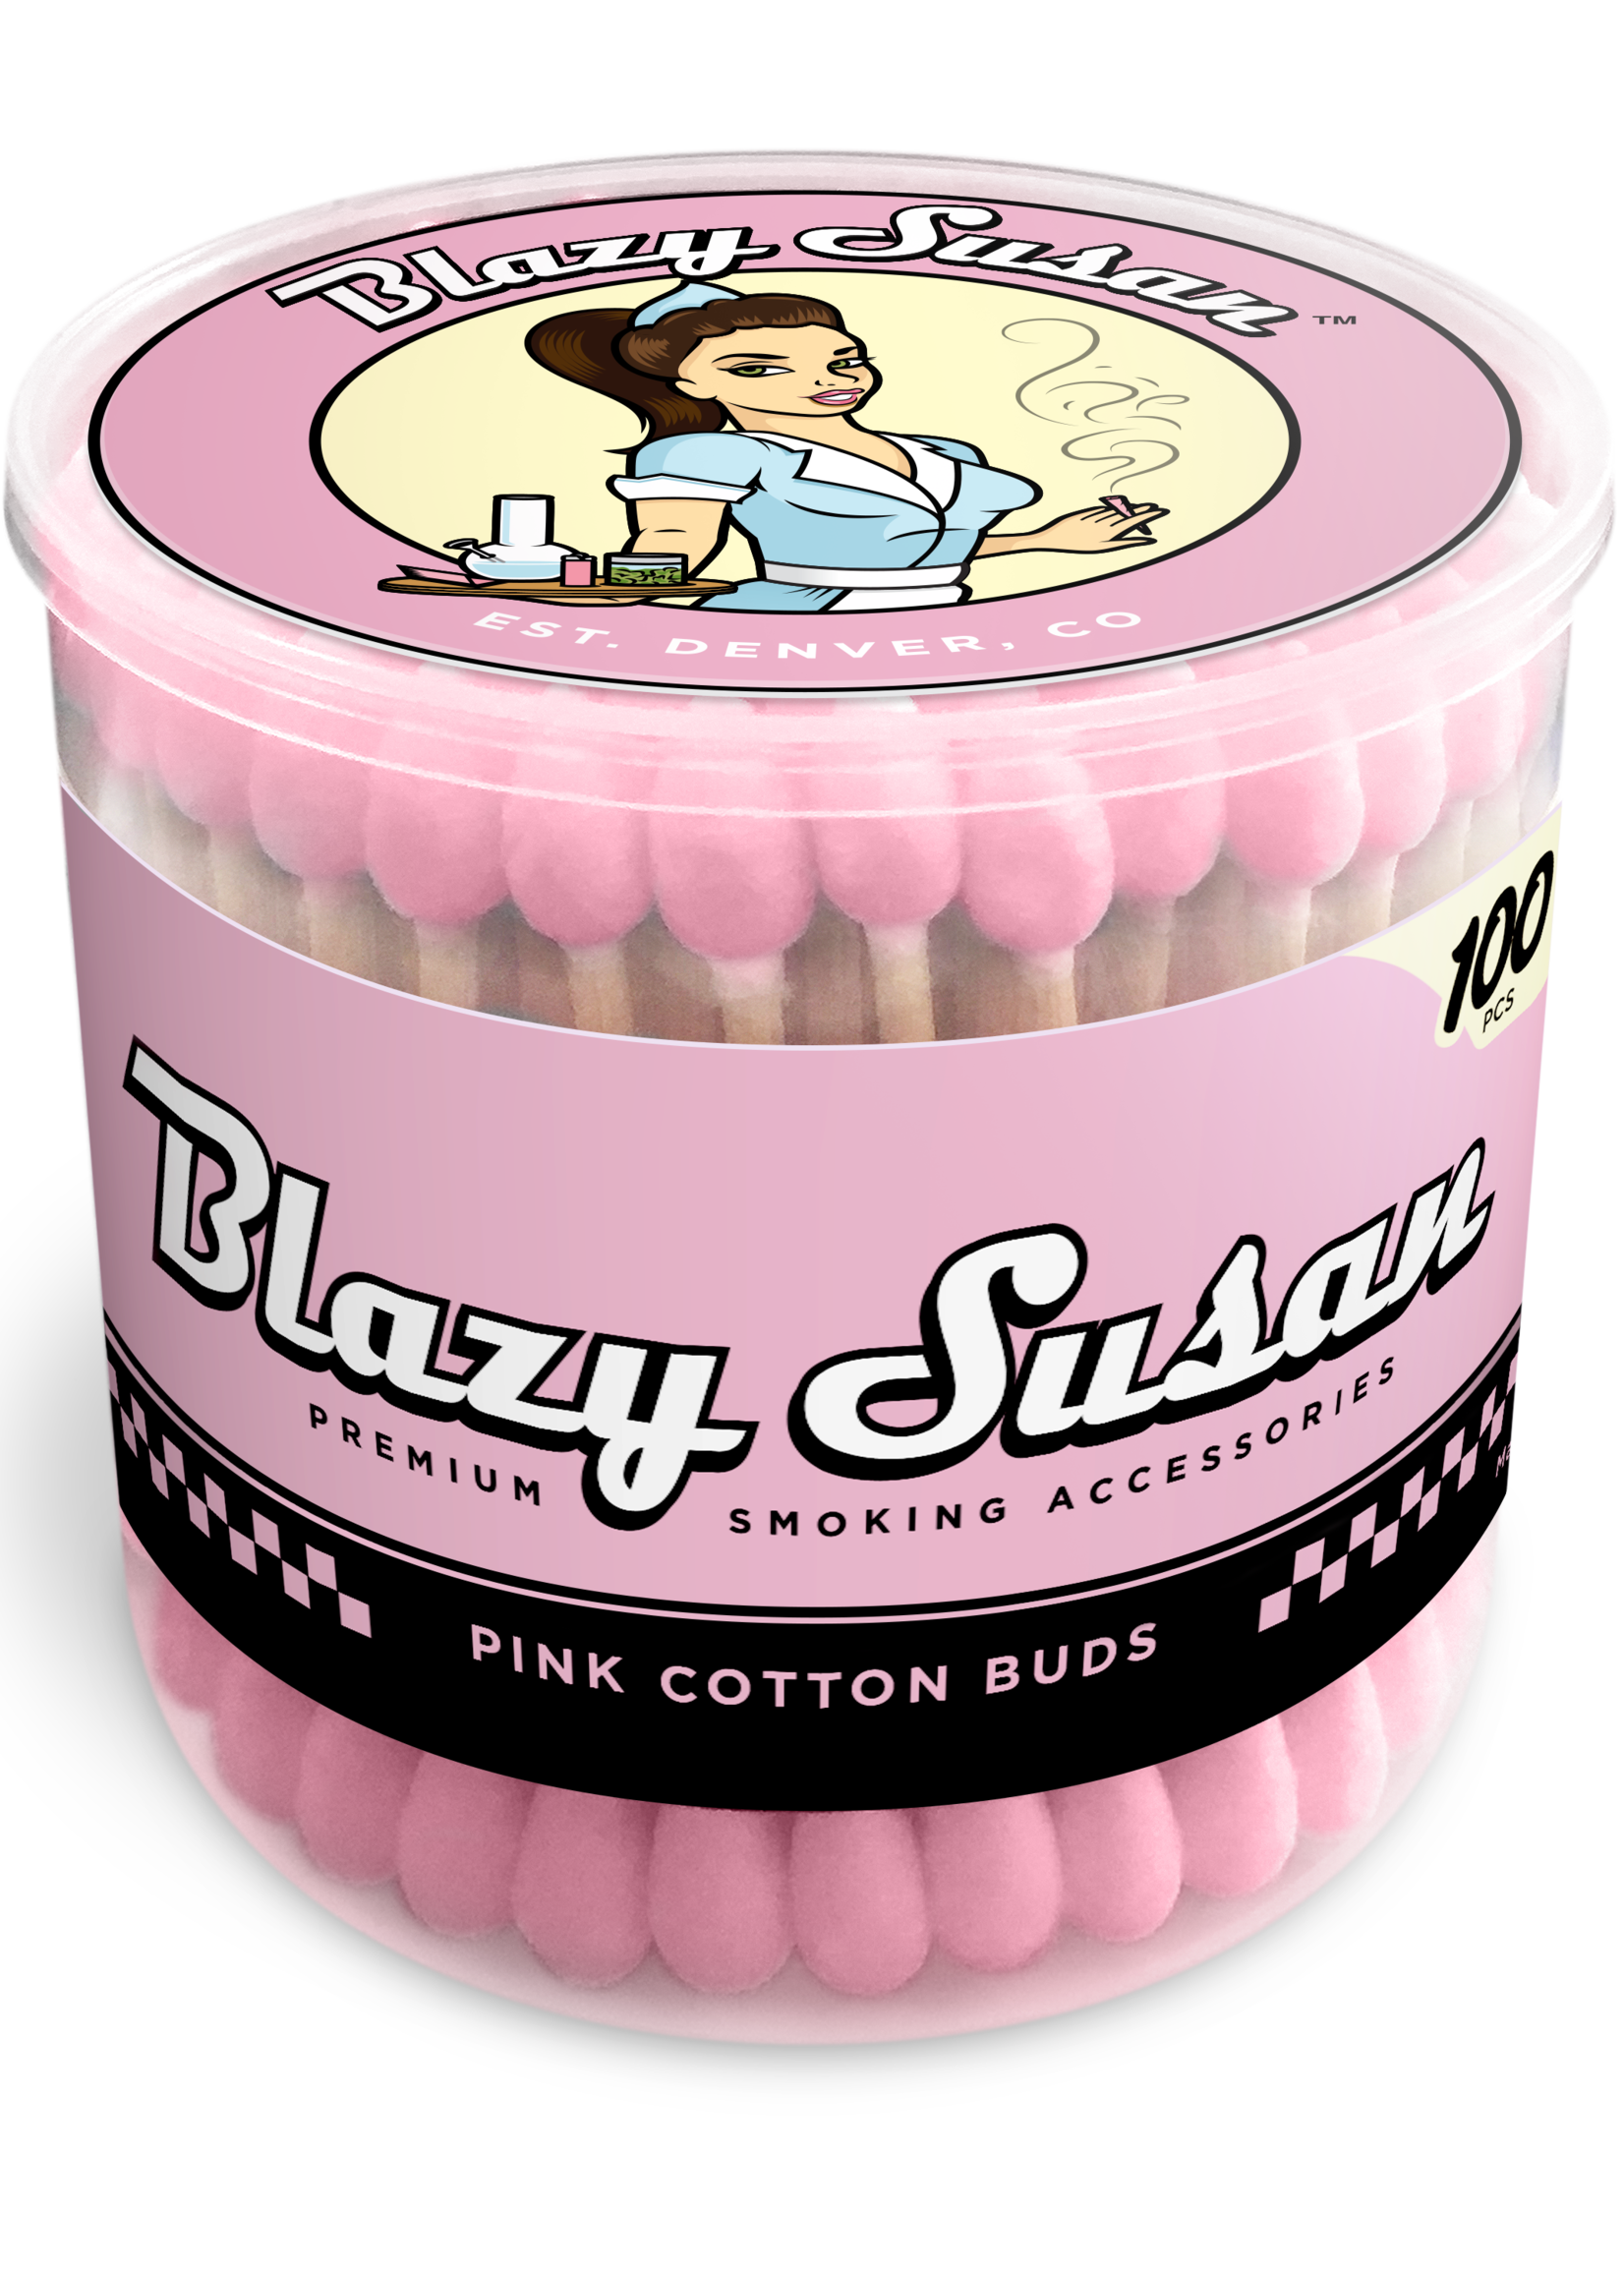 Blazy Susan Pink cotton buds